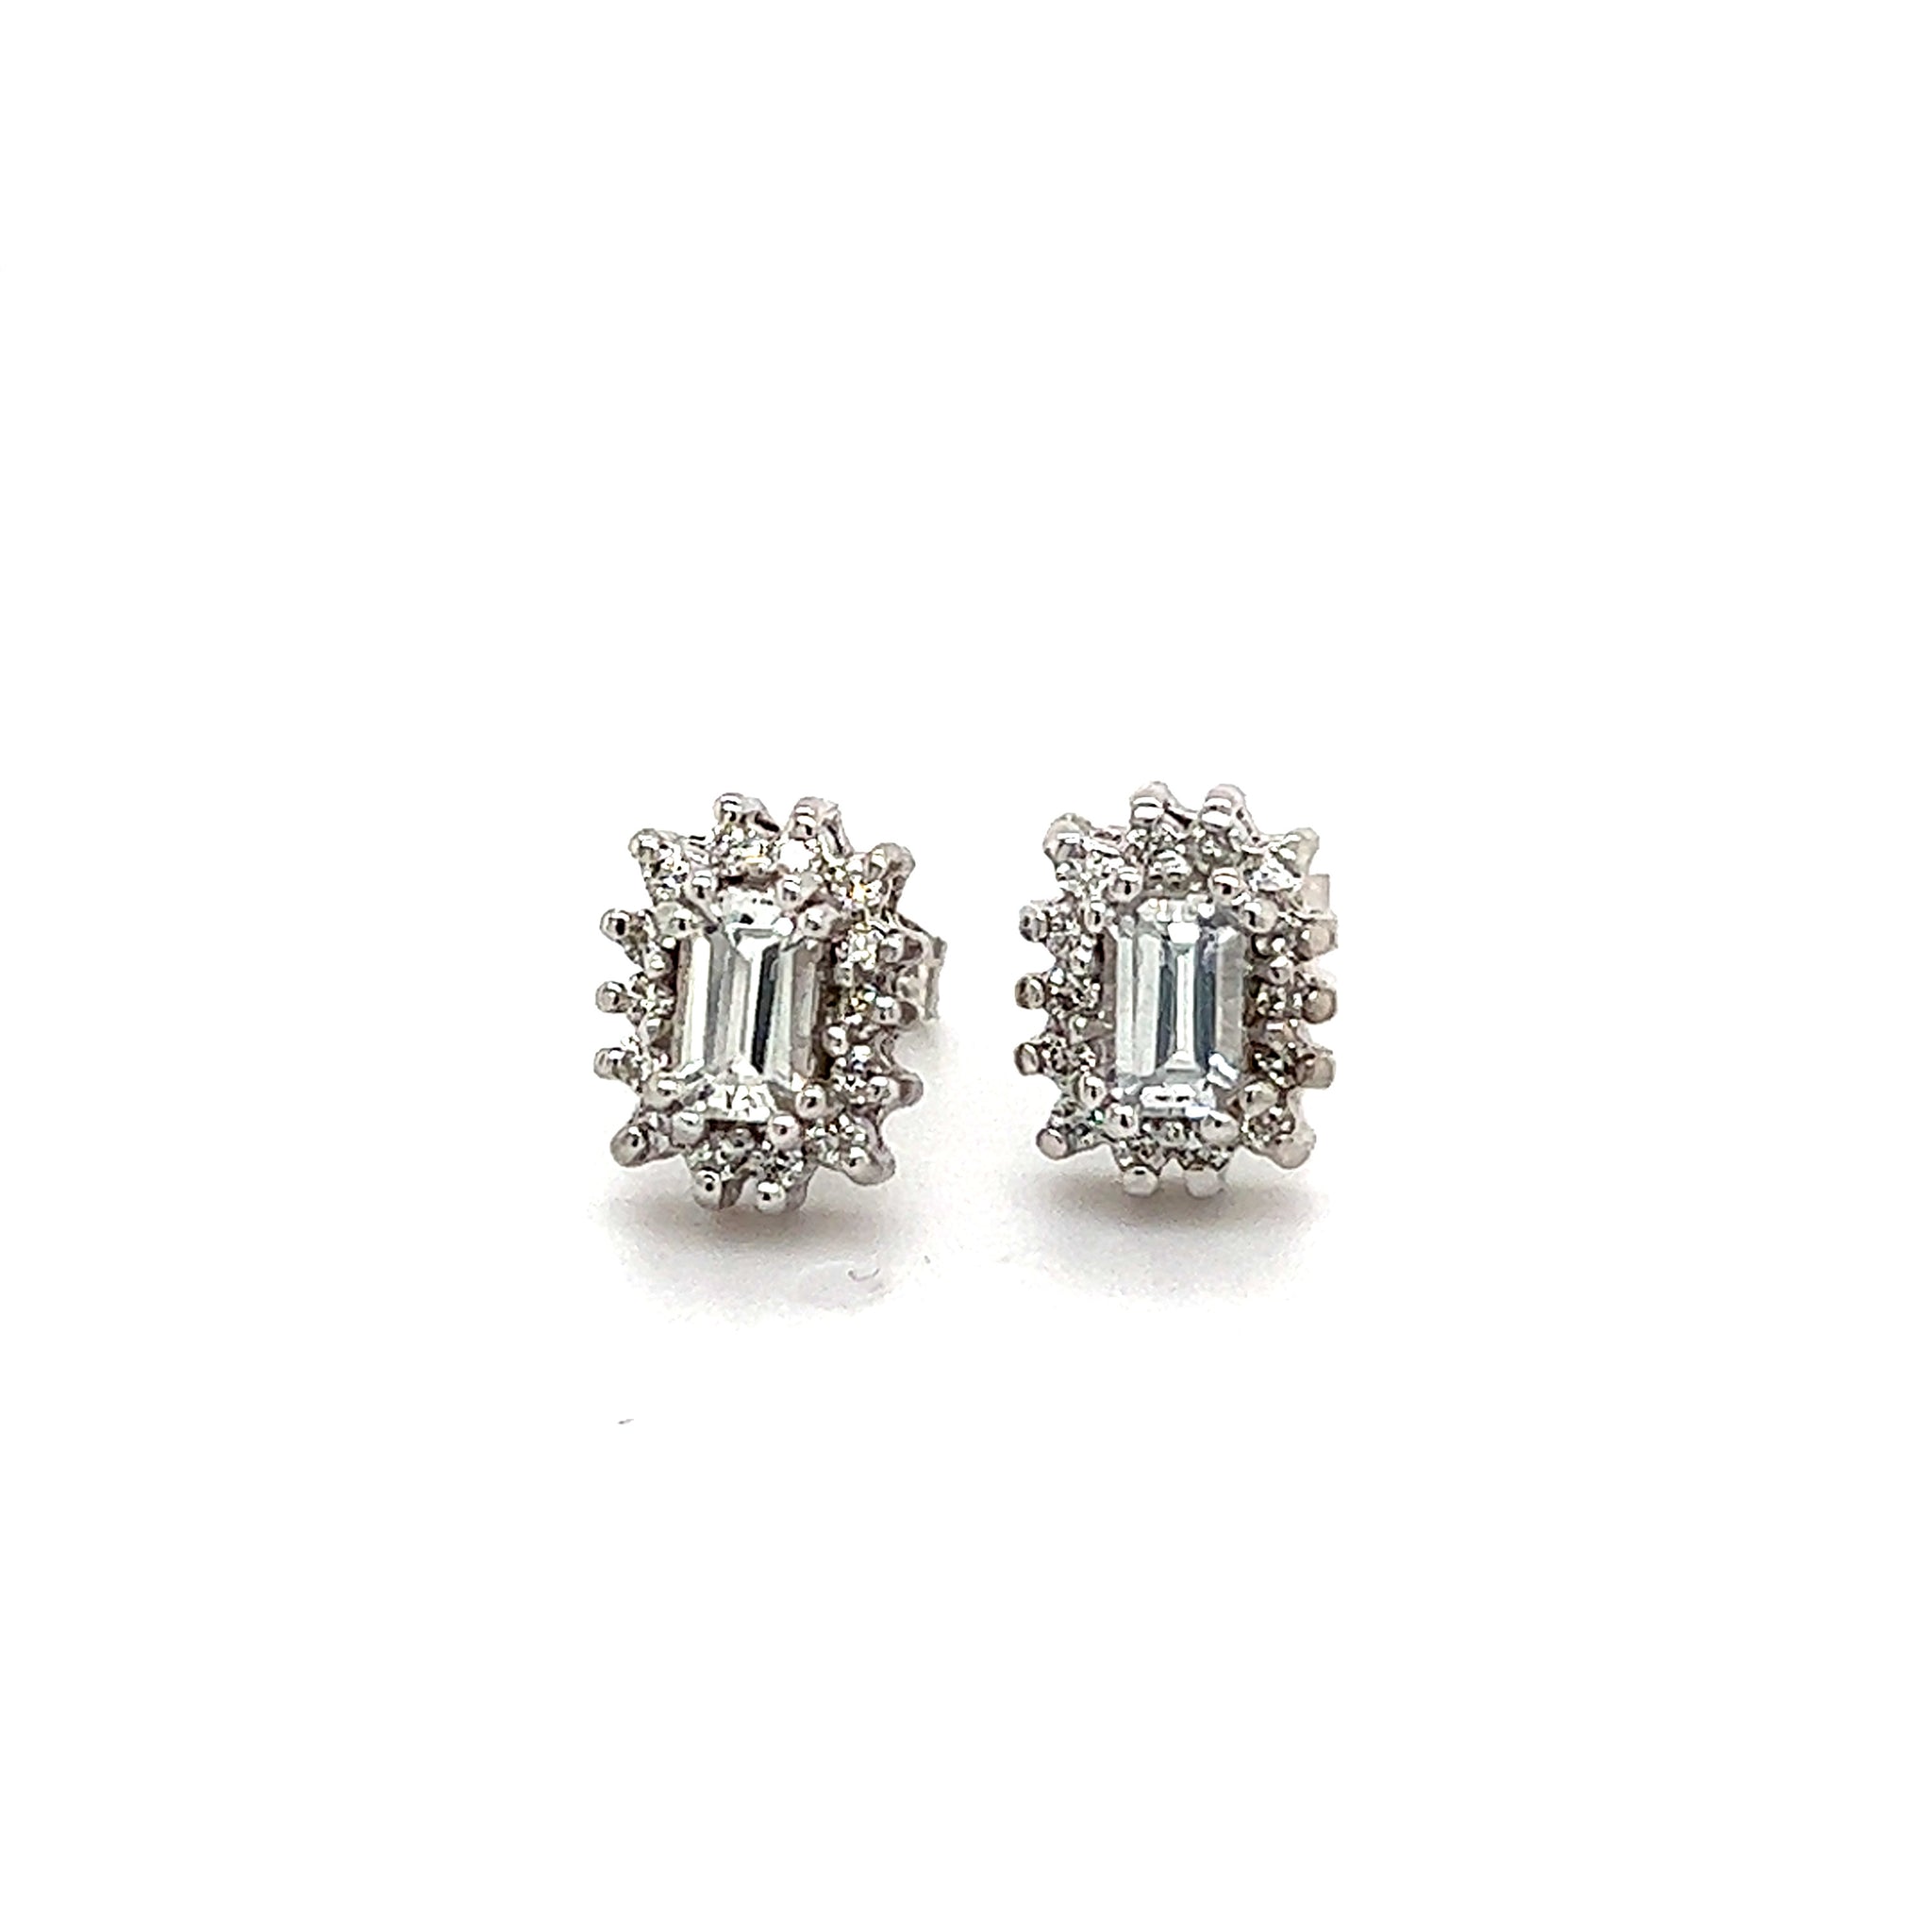 Natural Sapphire Diamond Stud Earrings 14k W Gold 0.94 TCW Certified $2950 121267